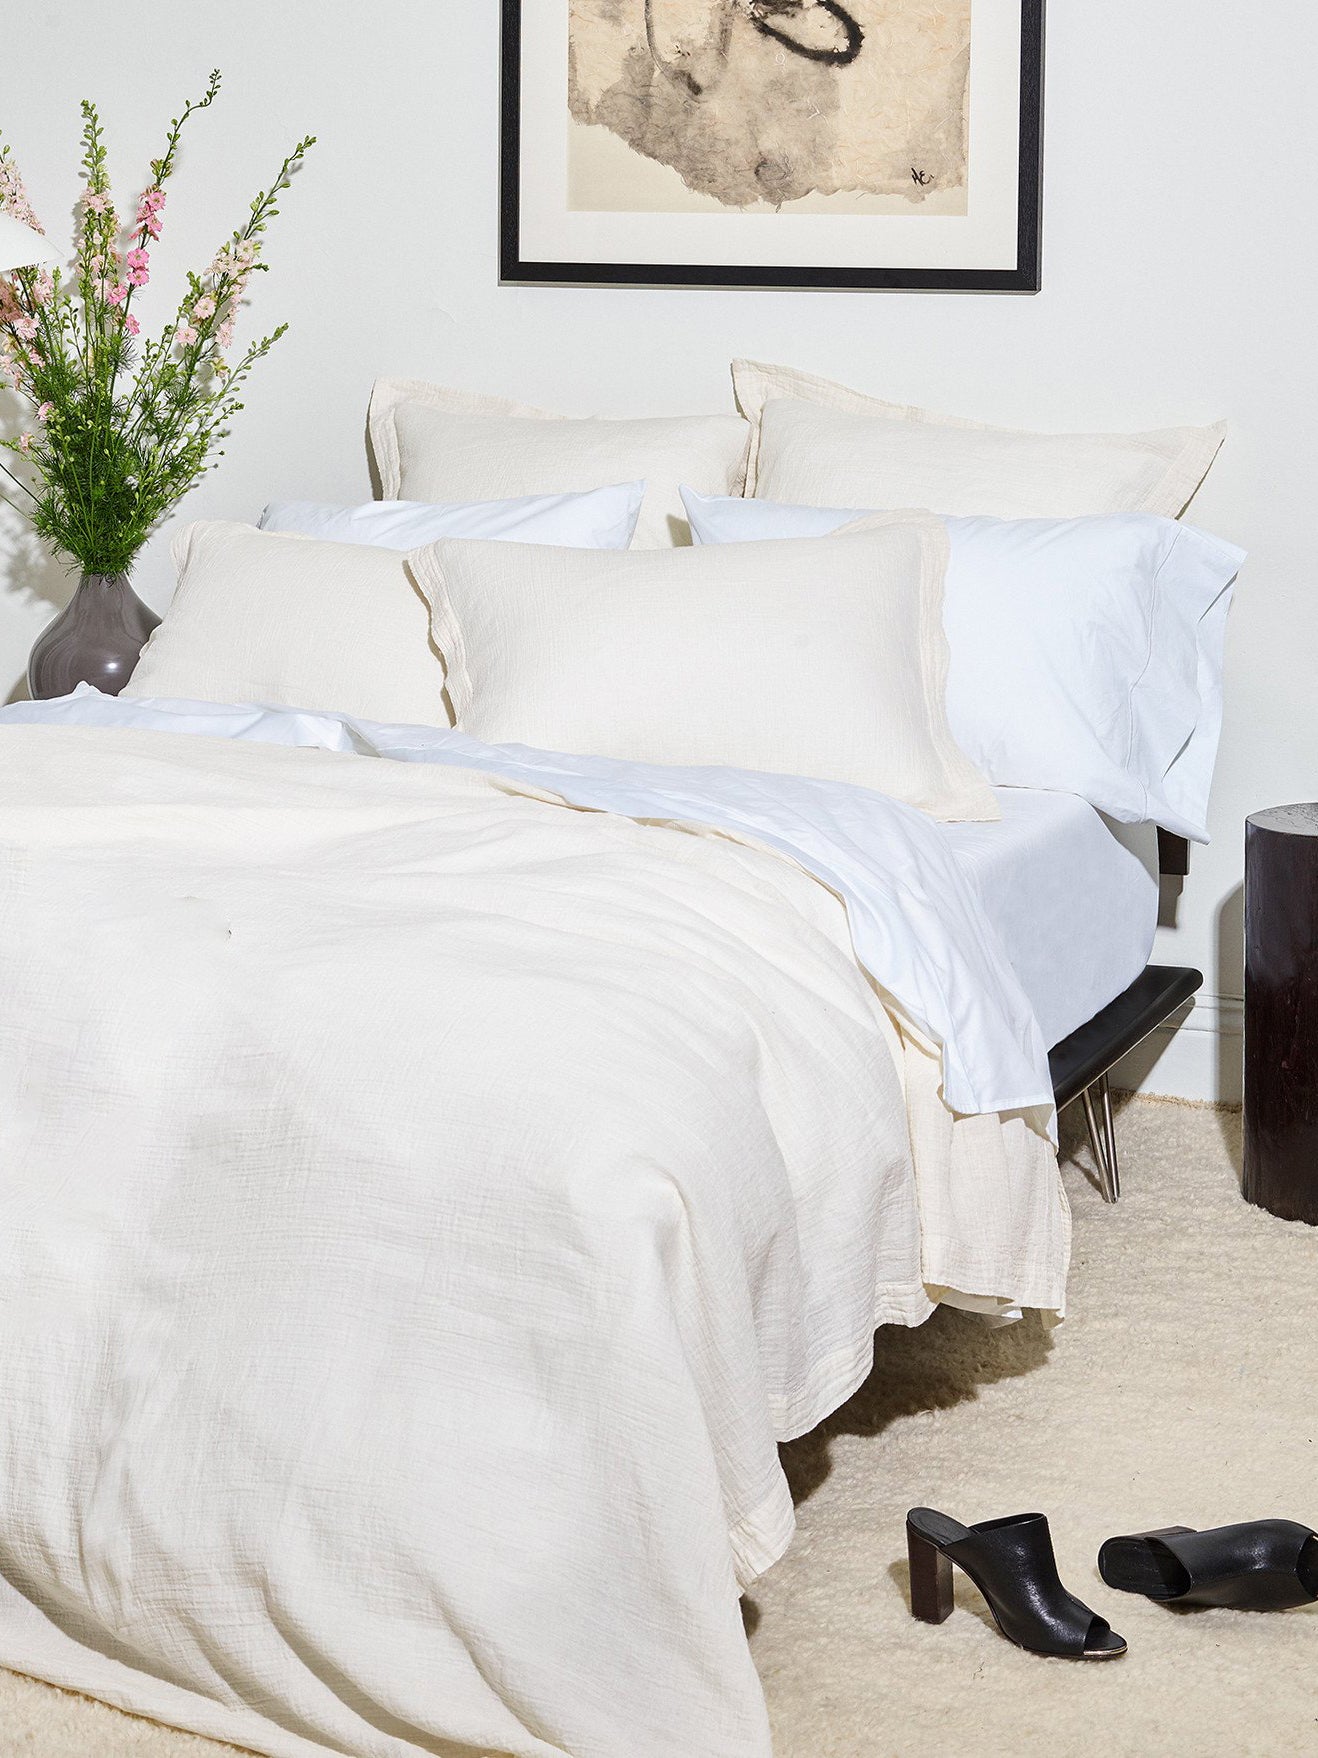 Off-white bedding by Snowe